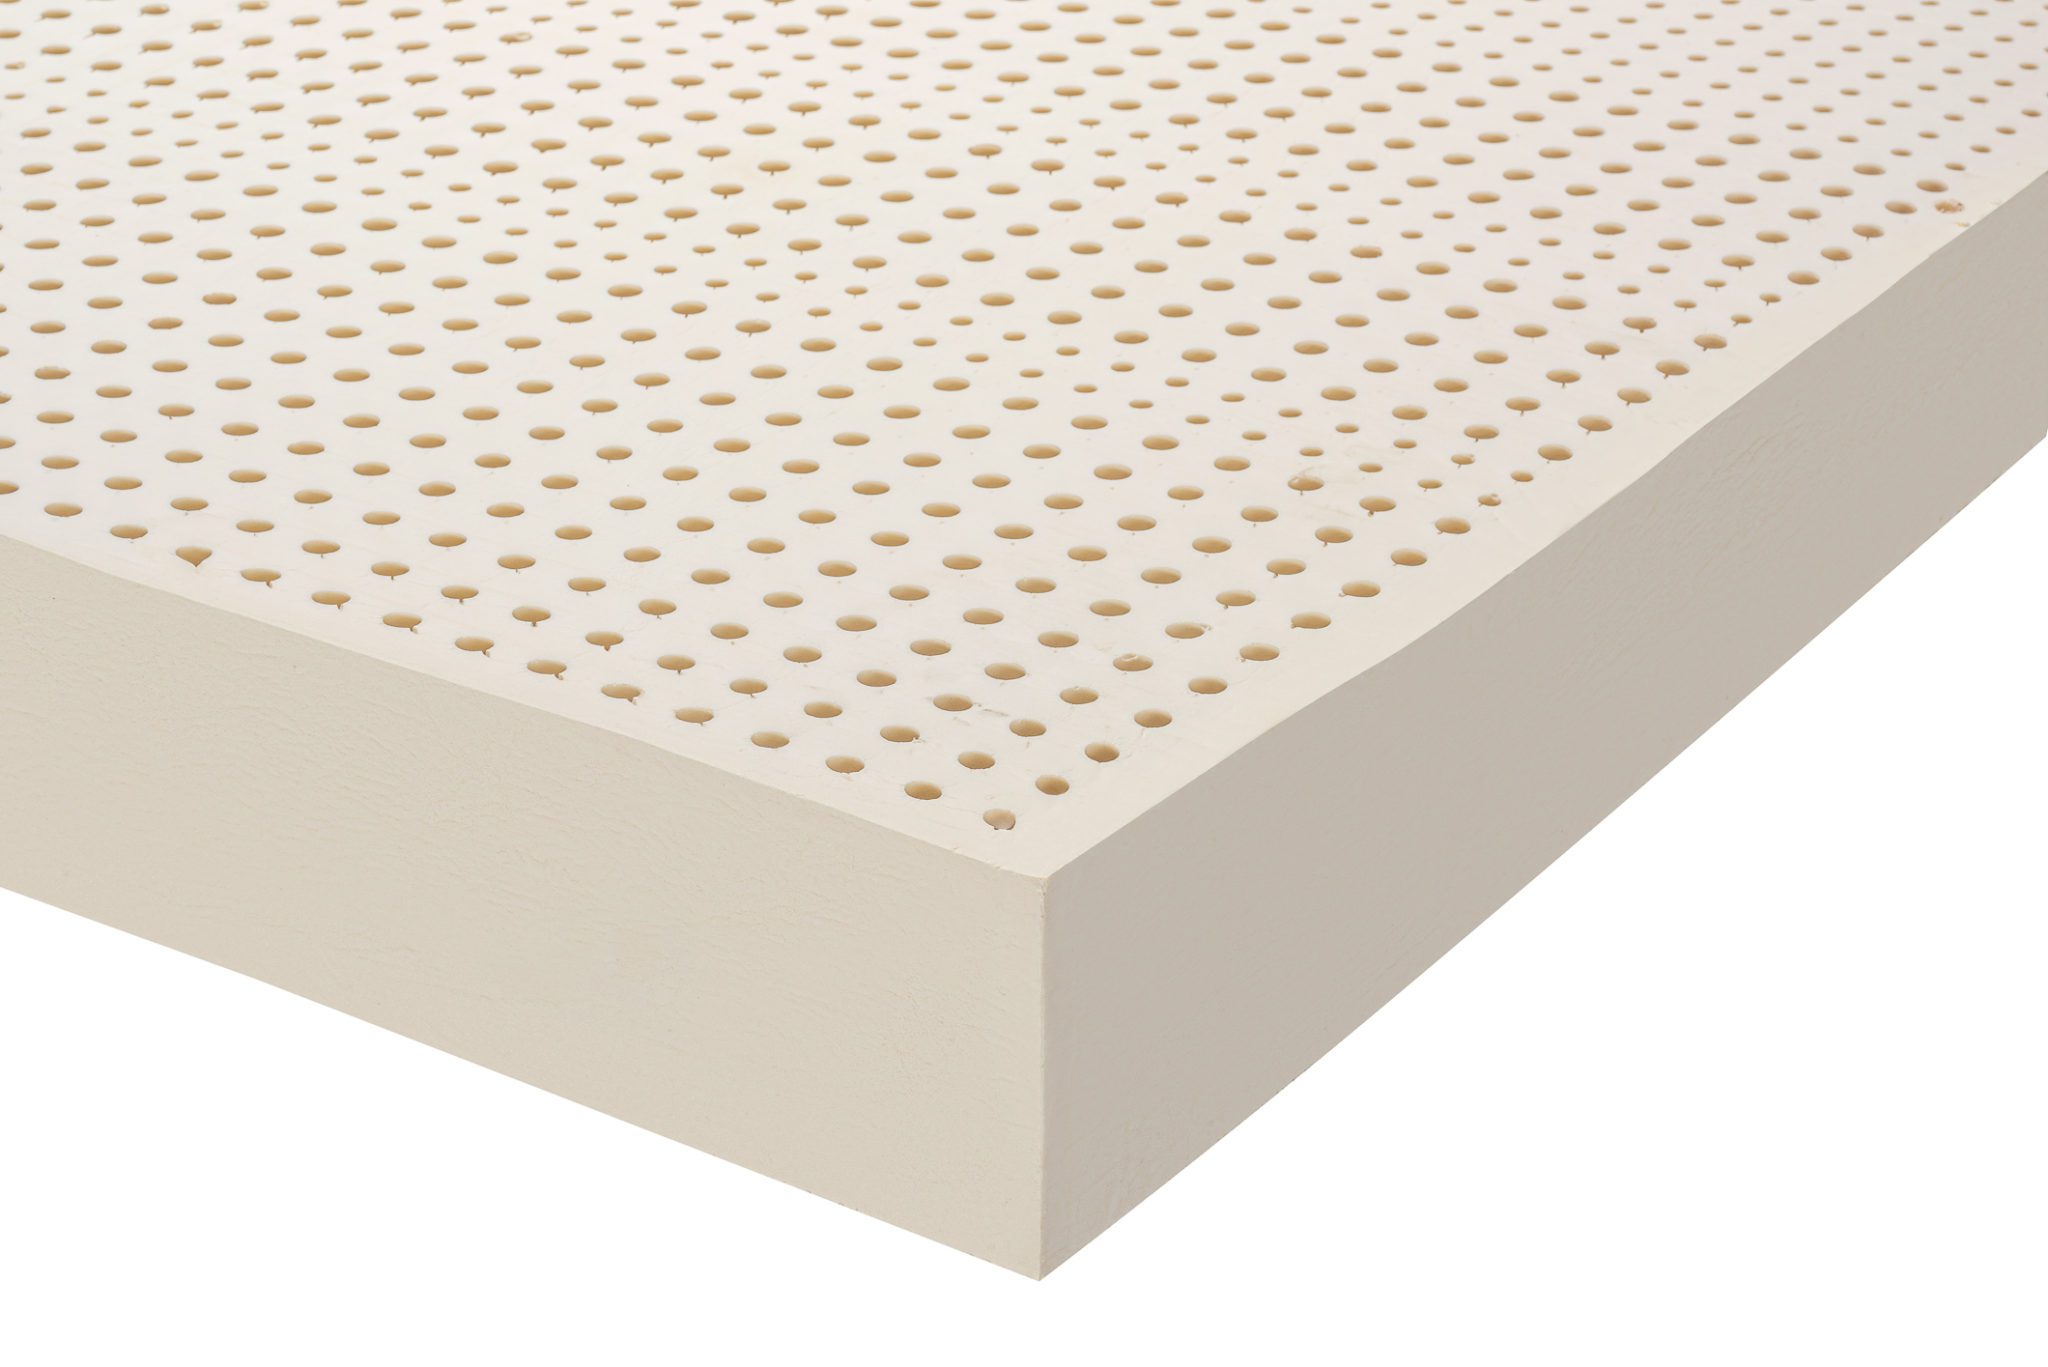 zoned headed mattress pad